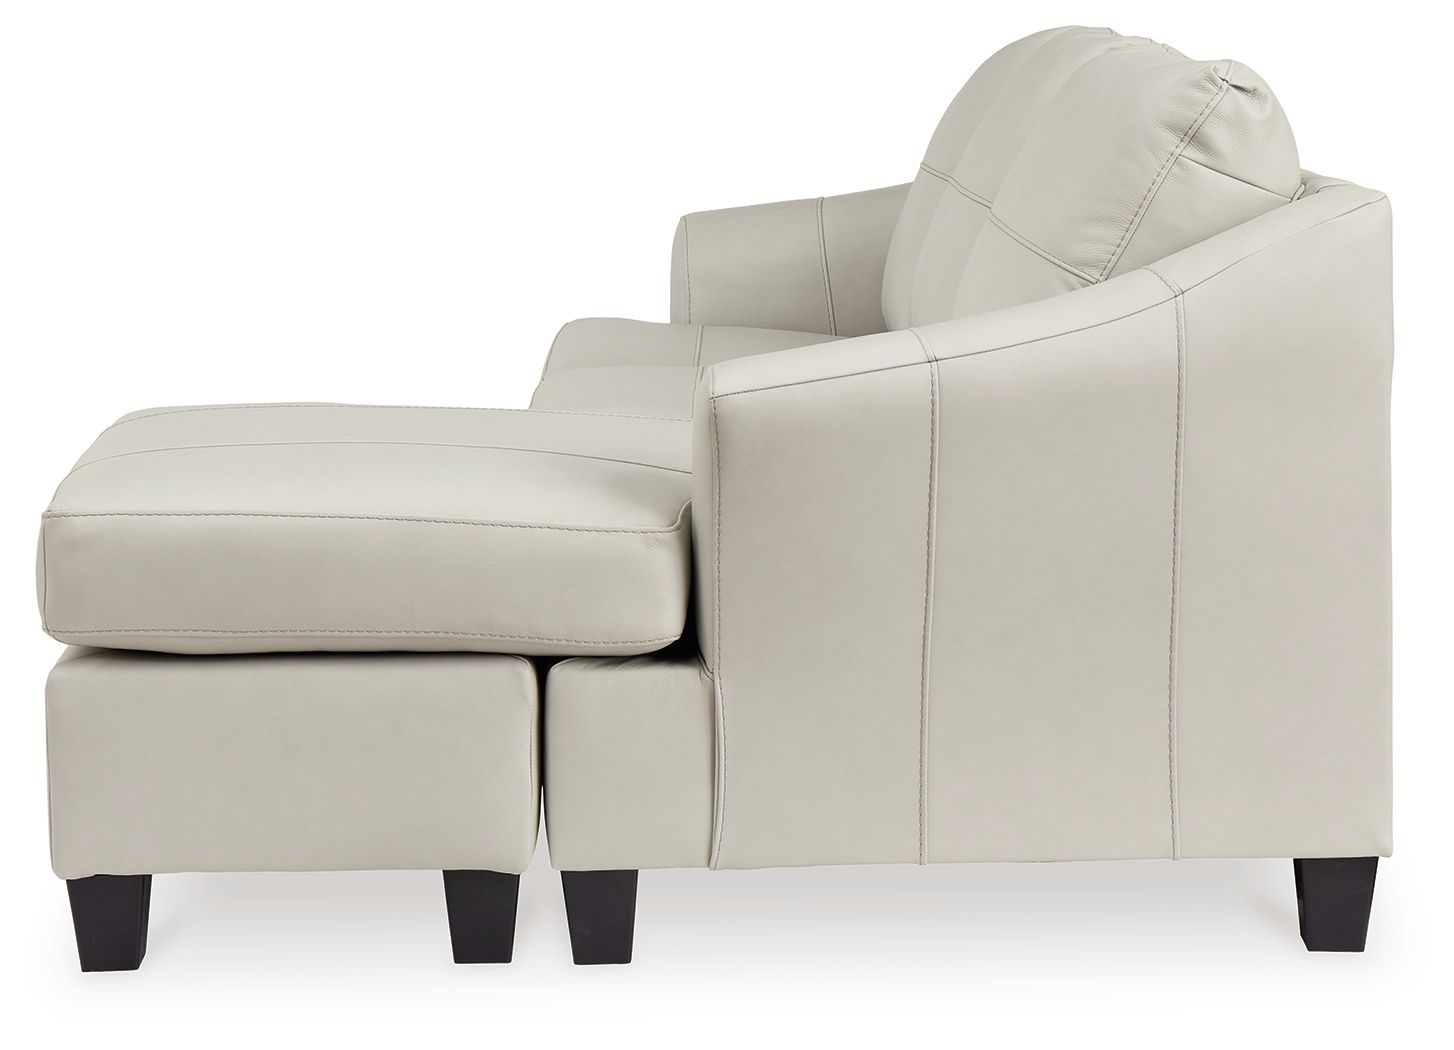 Genoa Leather Sectional Sofa